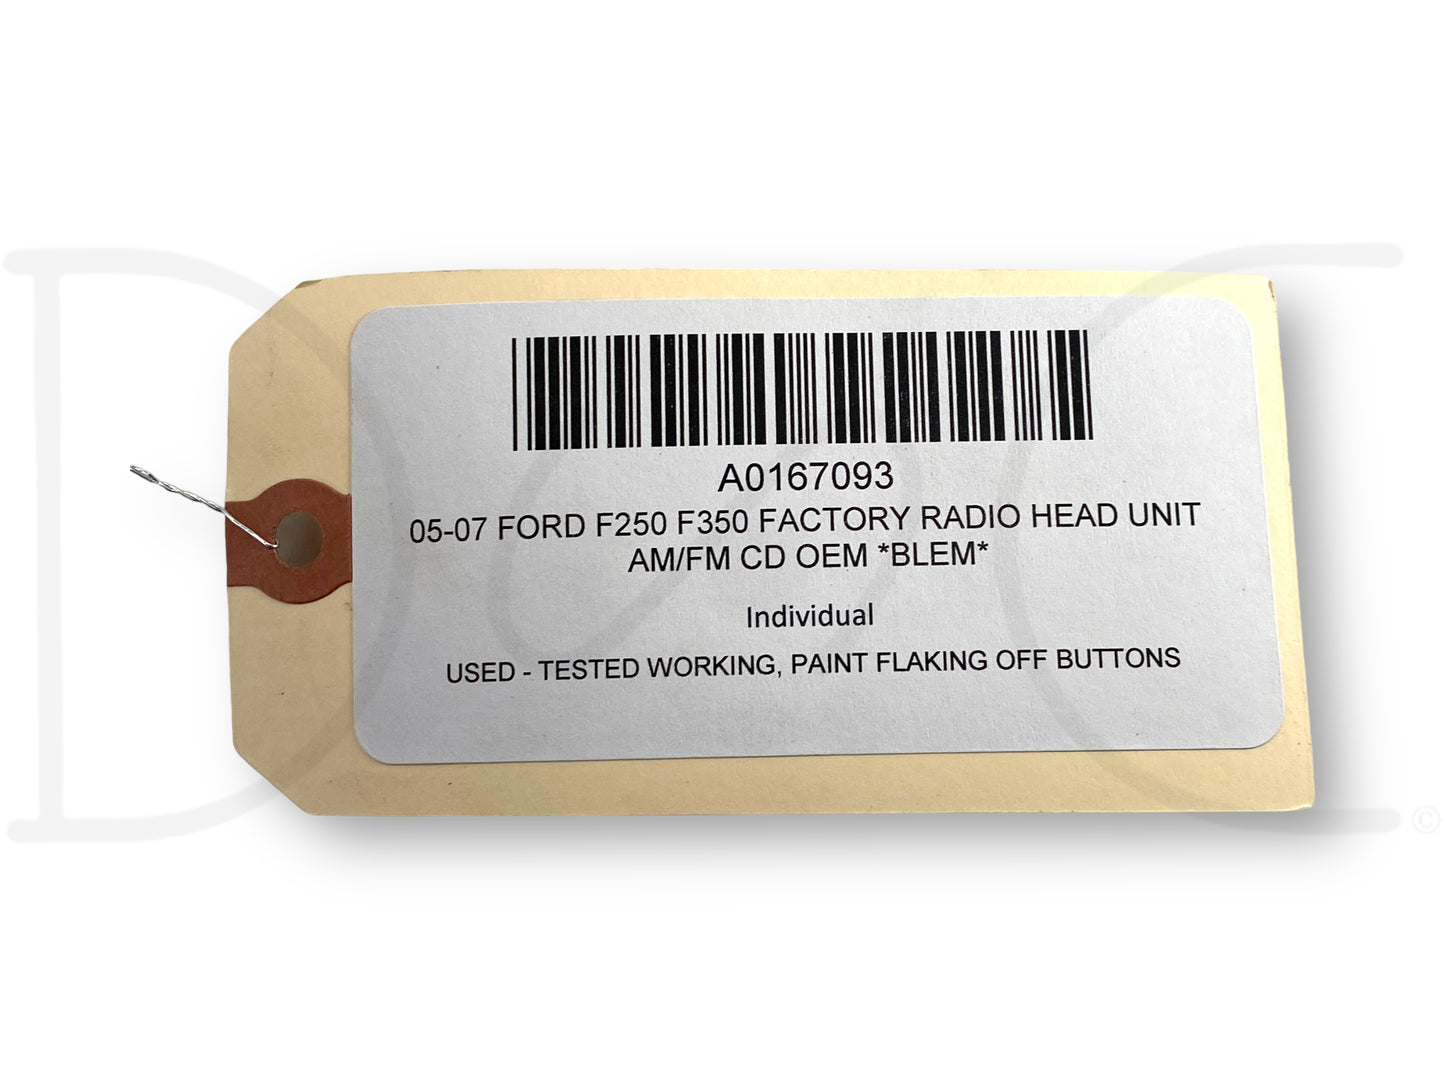 05-07 Ford F250 F350 Factory Radio Head Unit AM/FM CD OEM *Blem*